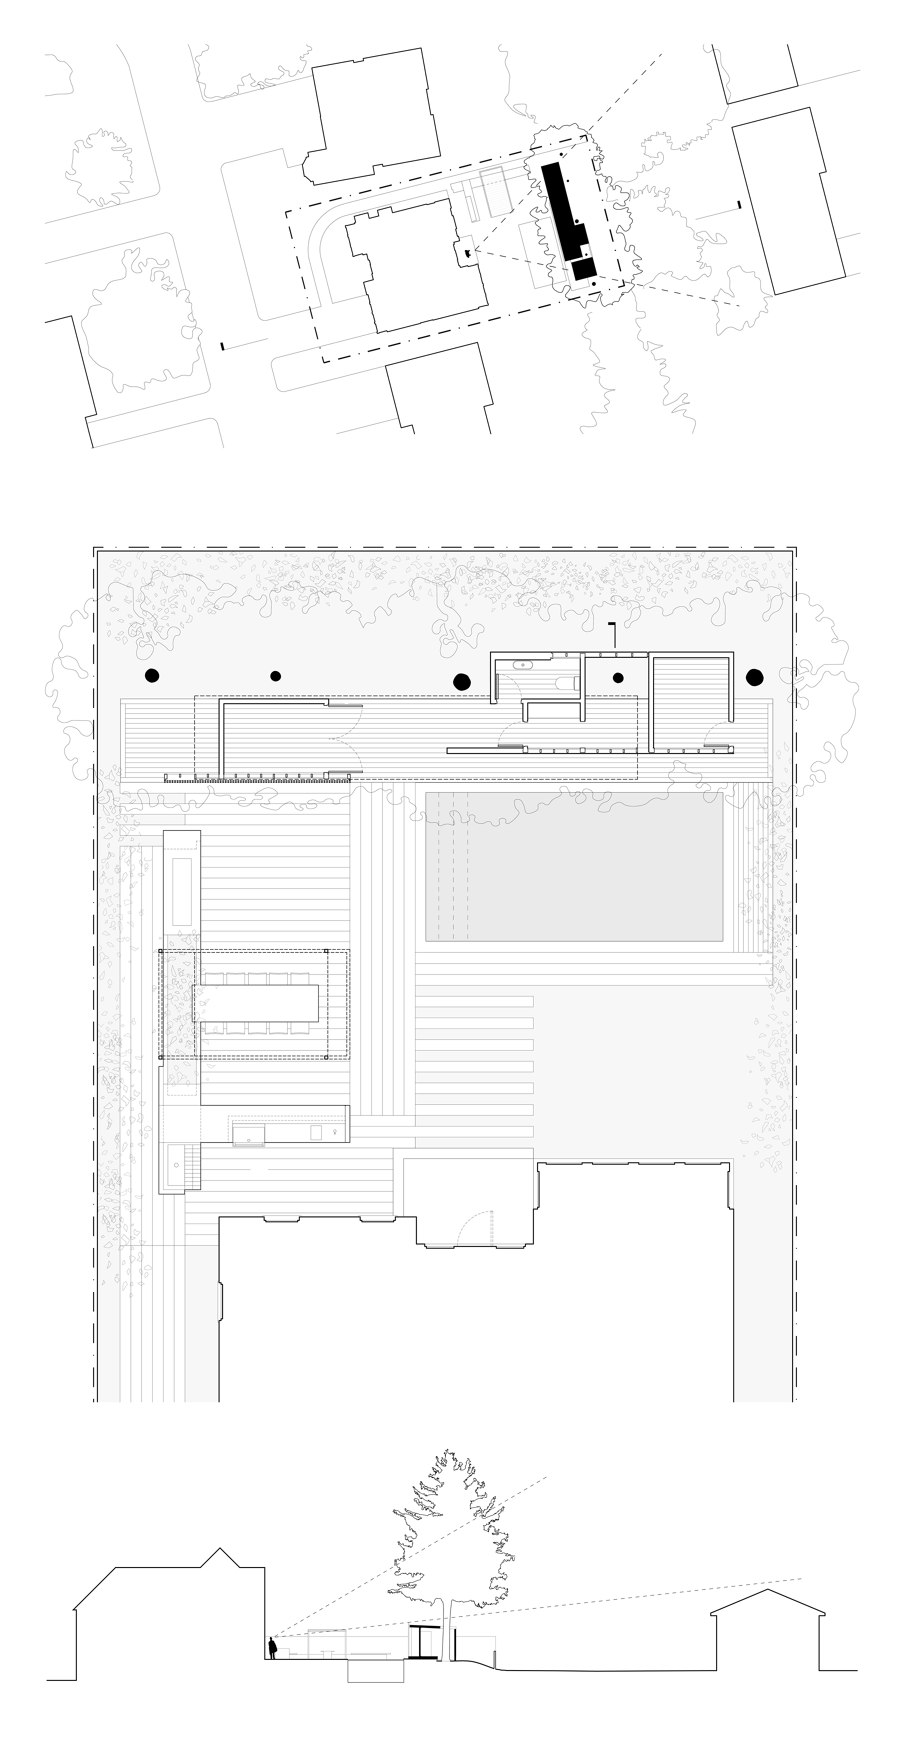 Clearview Pavilion di Amantea Architects | Piscine all'aperto